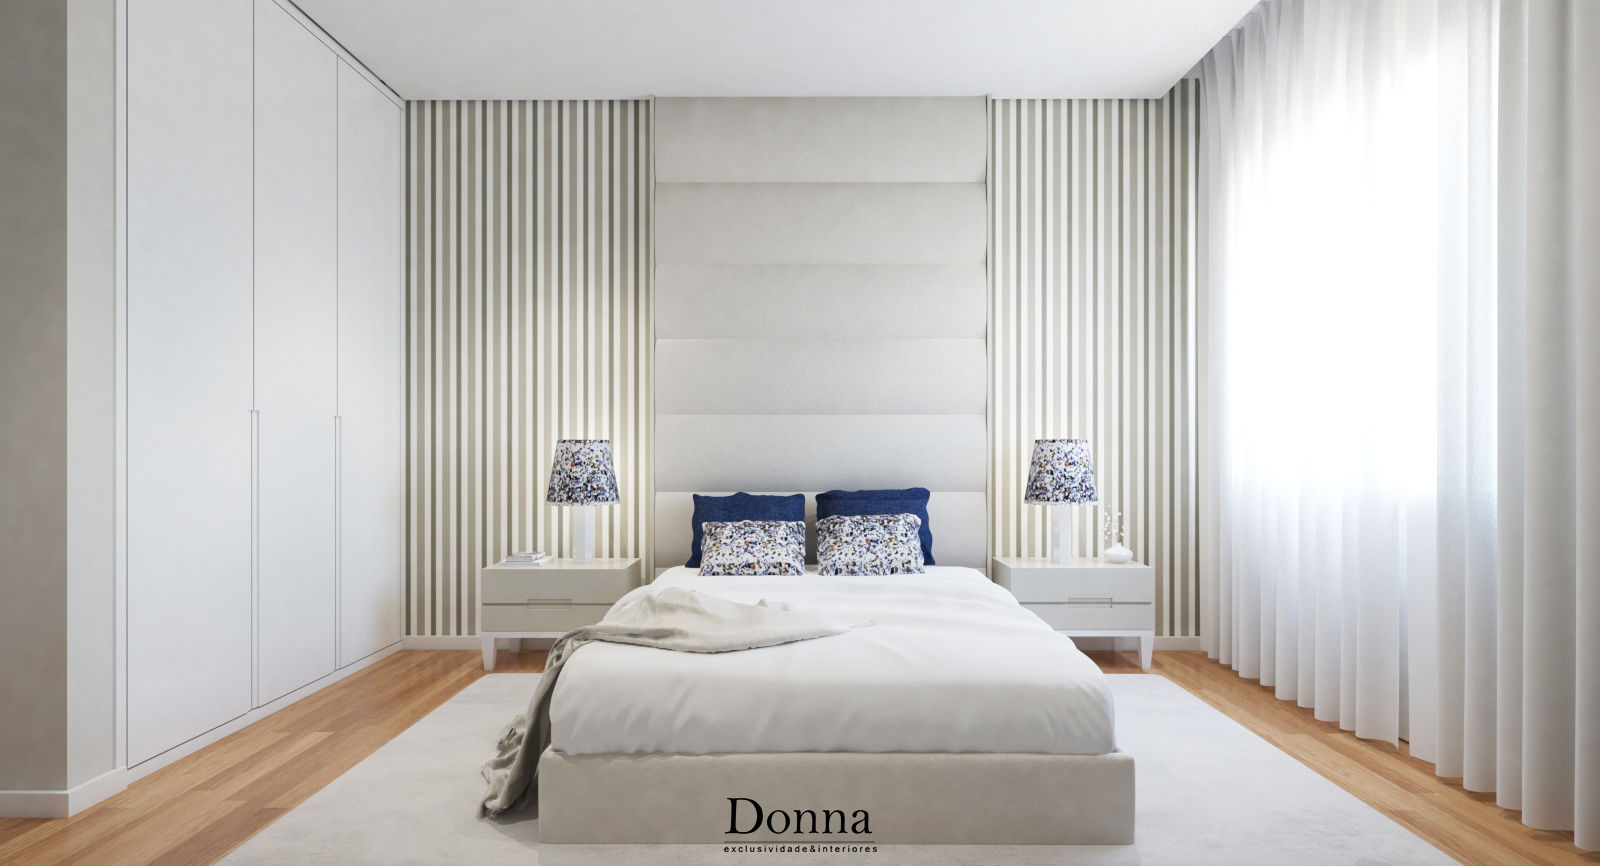 Apartamento Duplex no Porto, Donna - Exclusividade e Design Donna - Exclusividade e Design Dormitorios de estilo moderno Camas y cabeceras